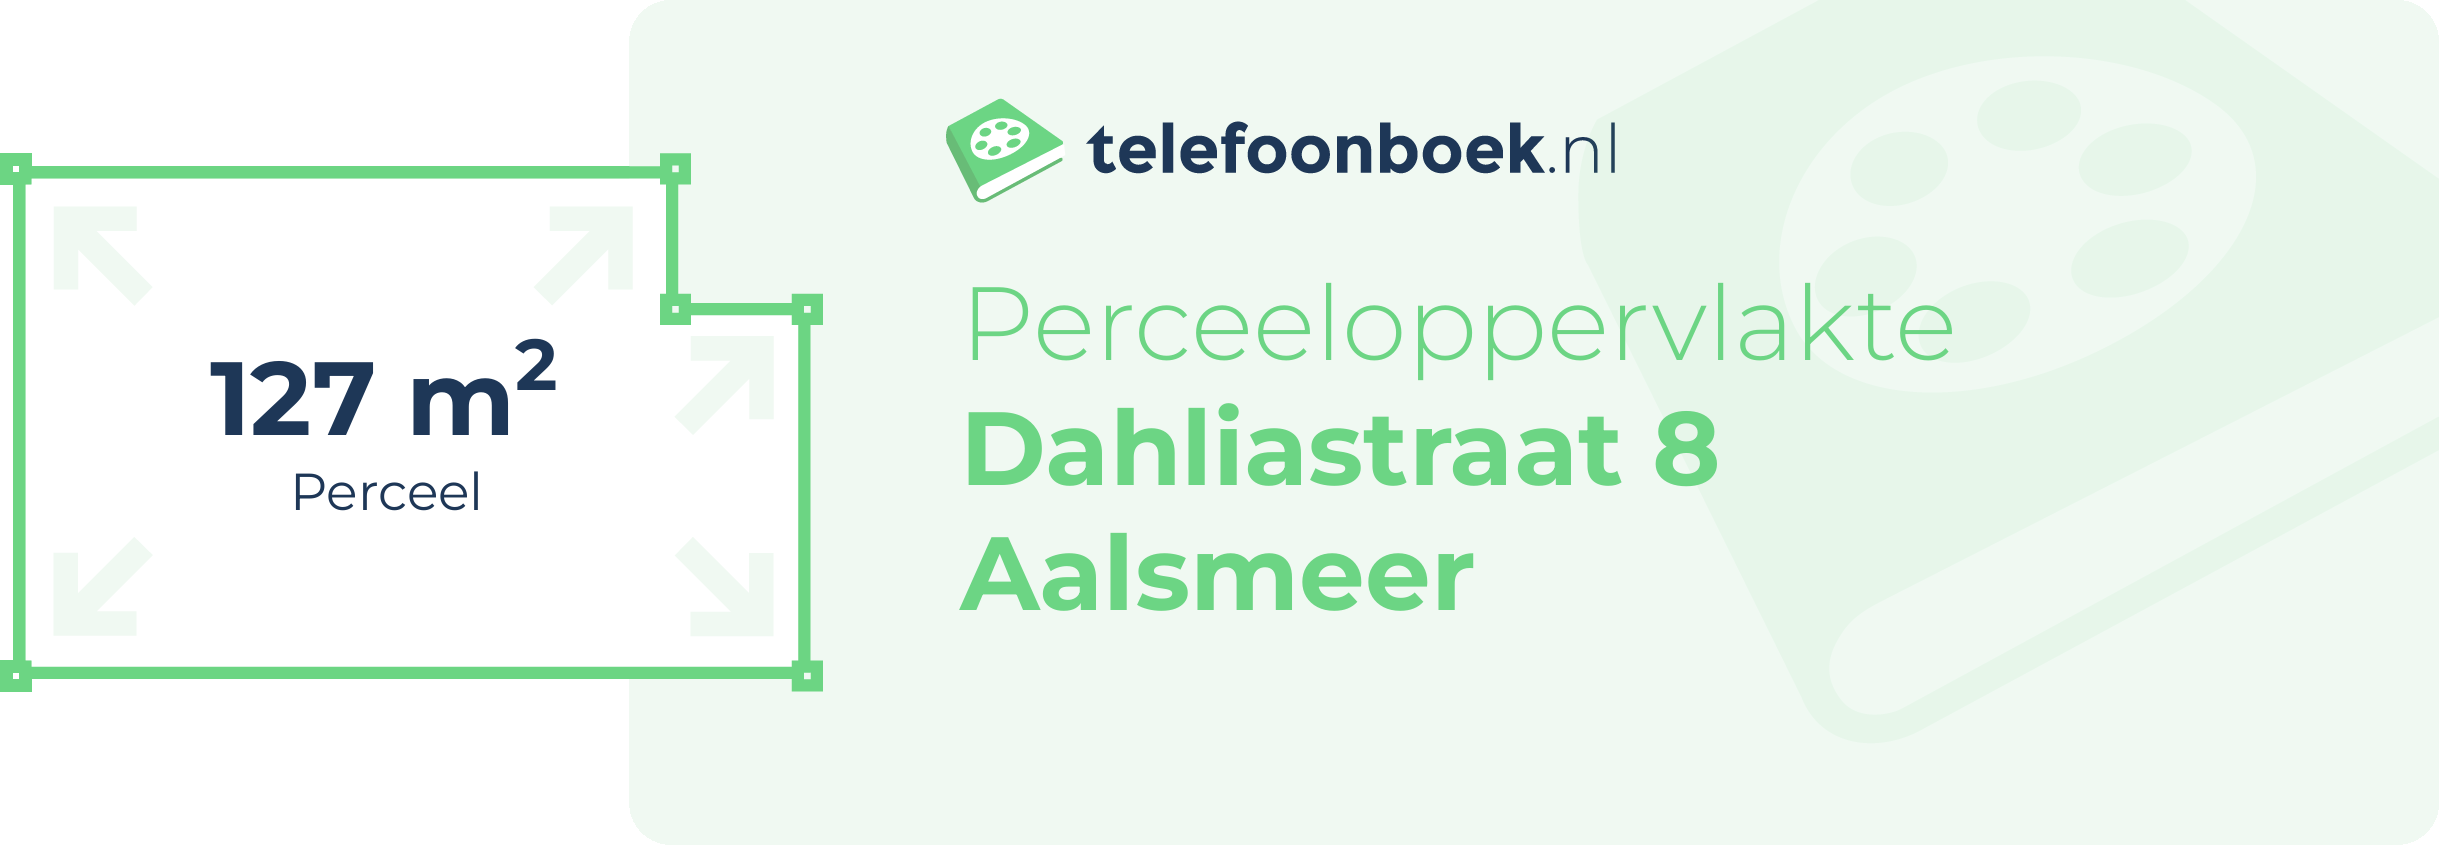 Perceeloppervlakte Dahliastraat 8 Aalsmeer